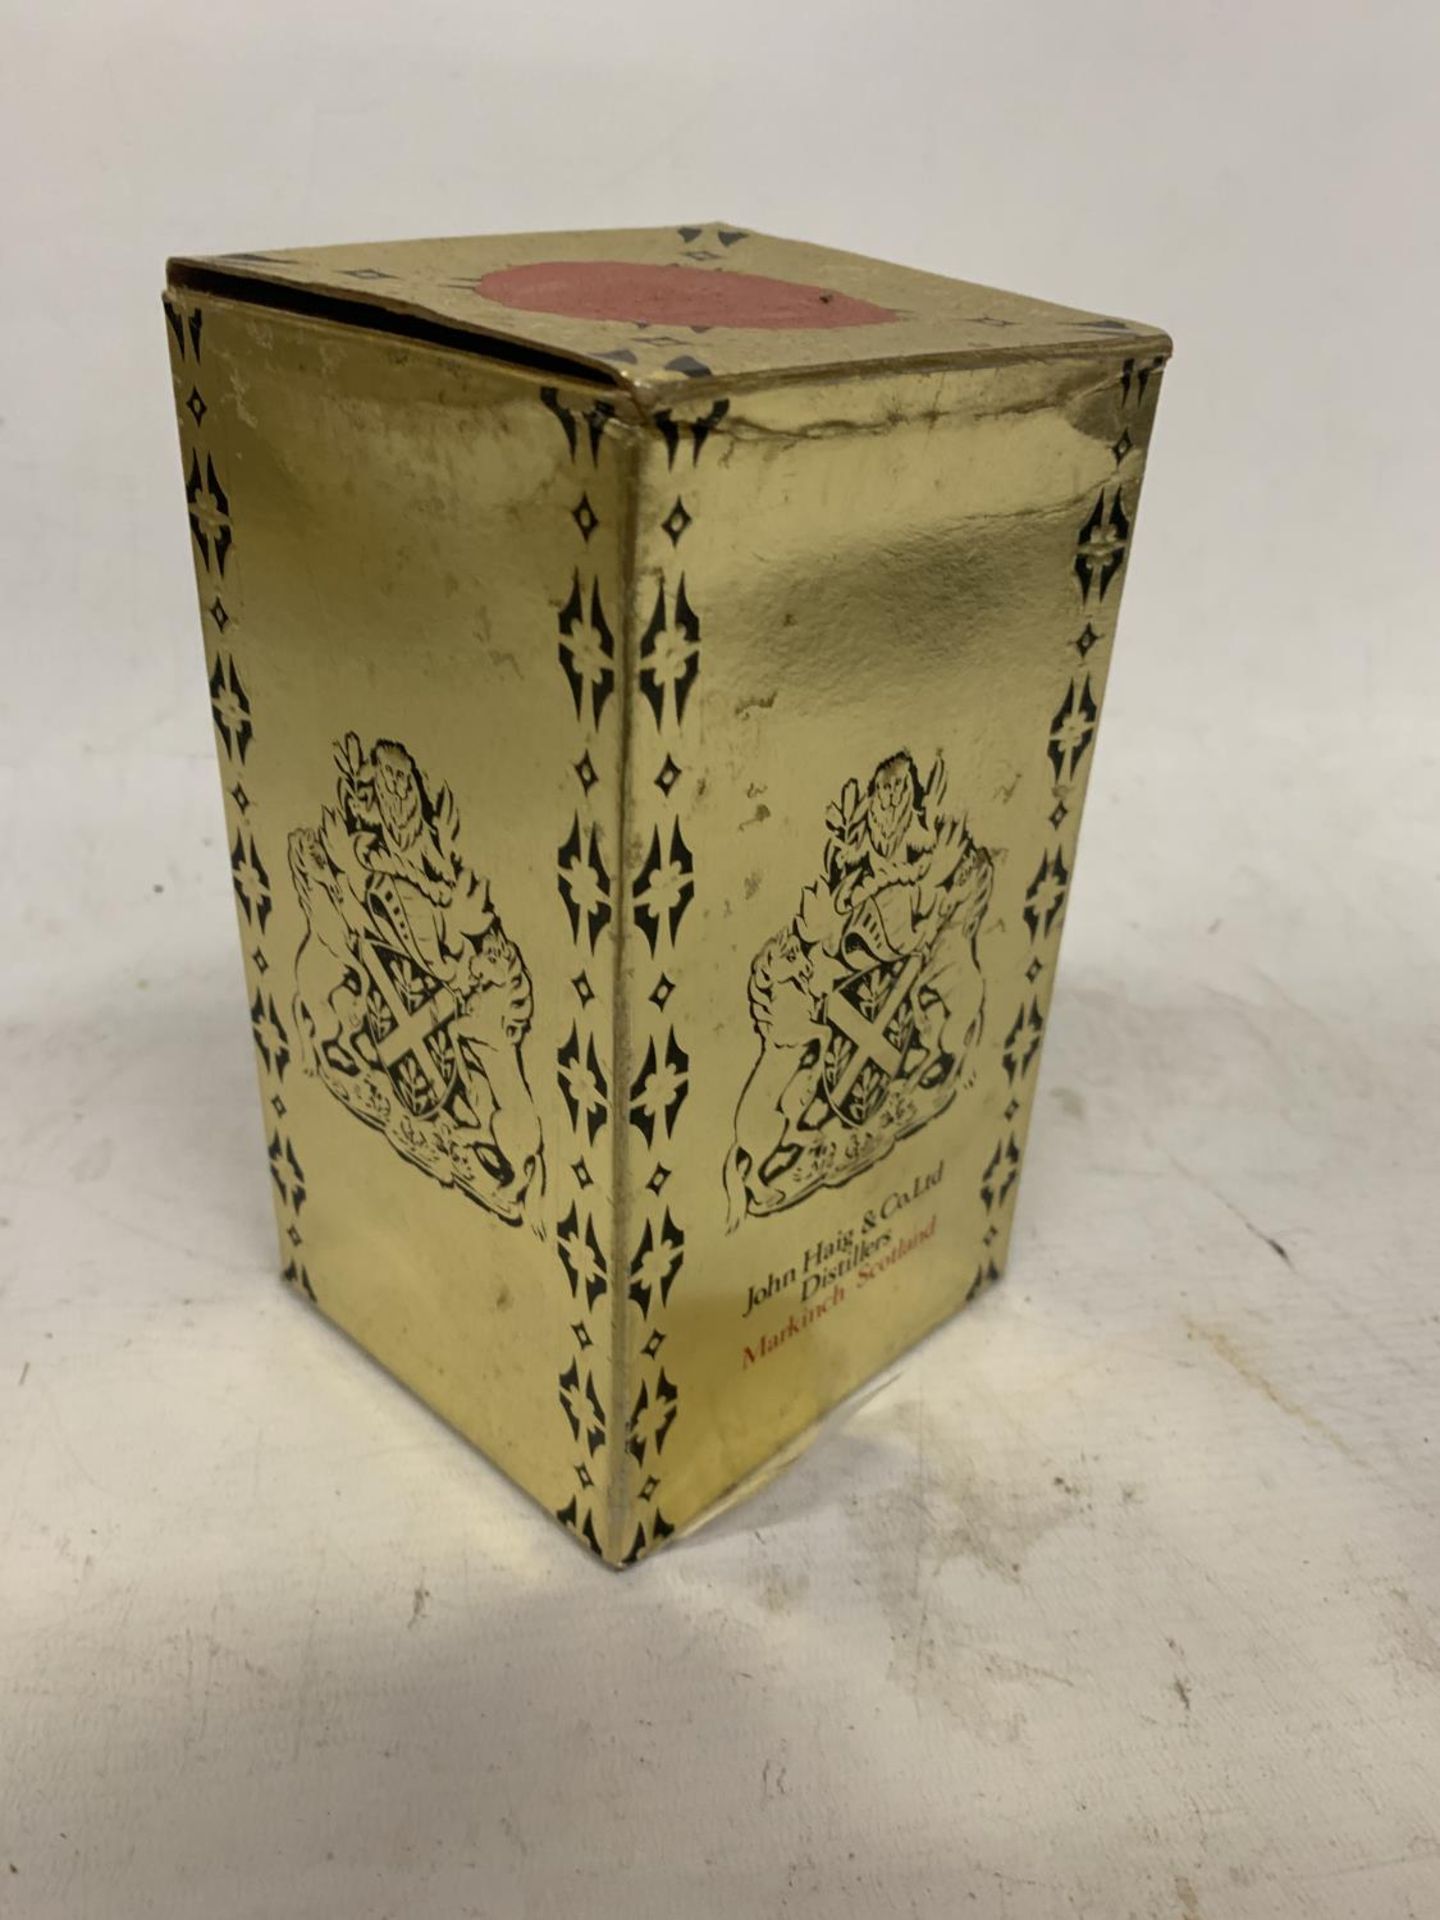 A BOXED BOTTLE - BOLS MUSICAL BALLERINA GOLD LIQUEUR - Image 2 of 5